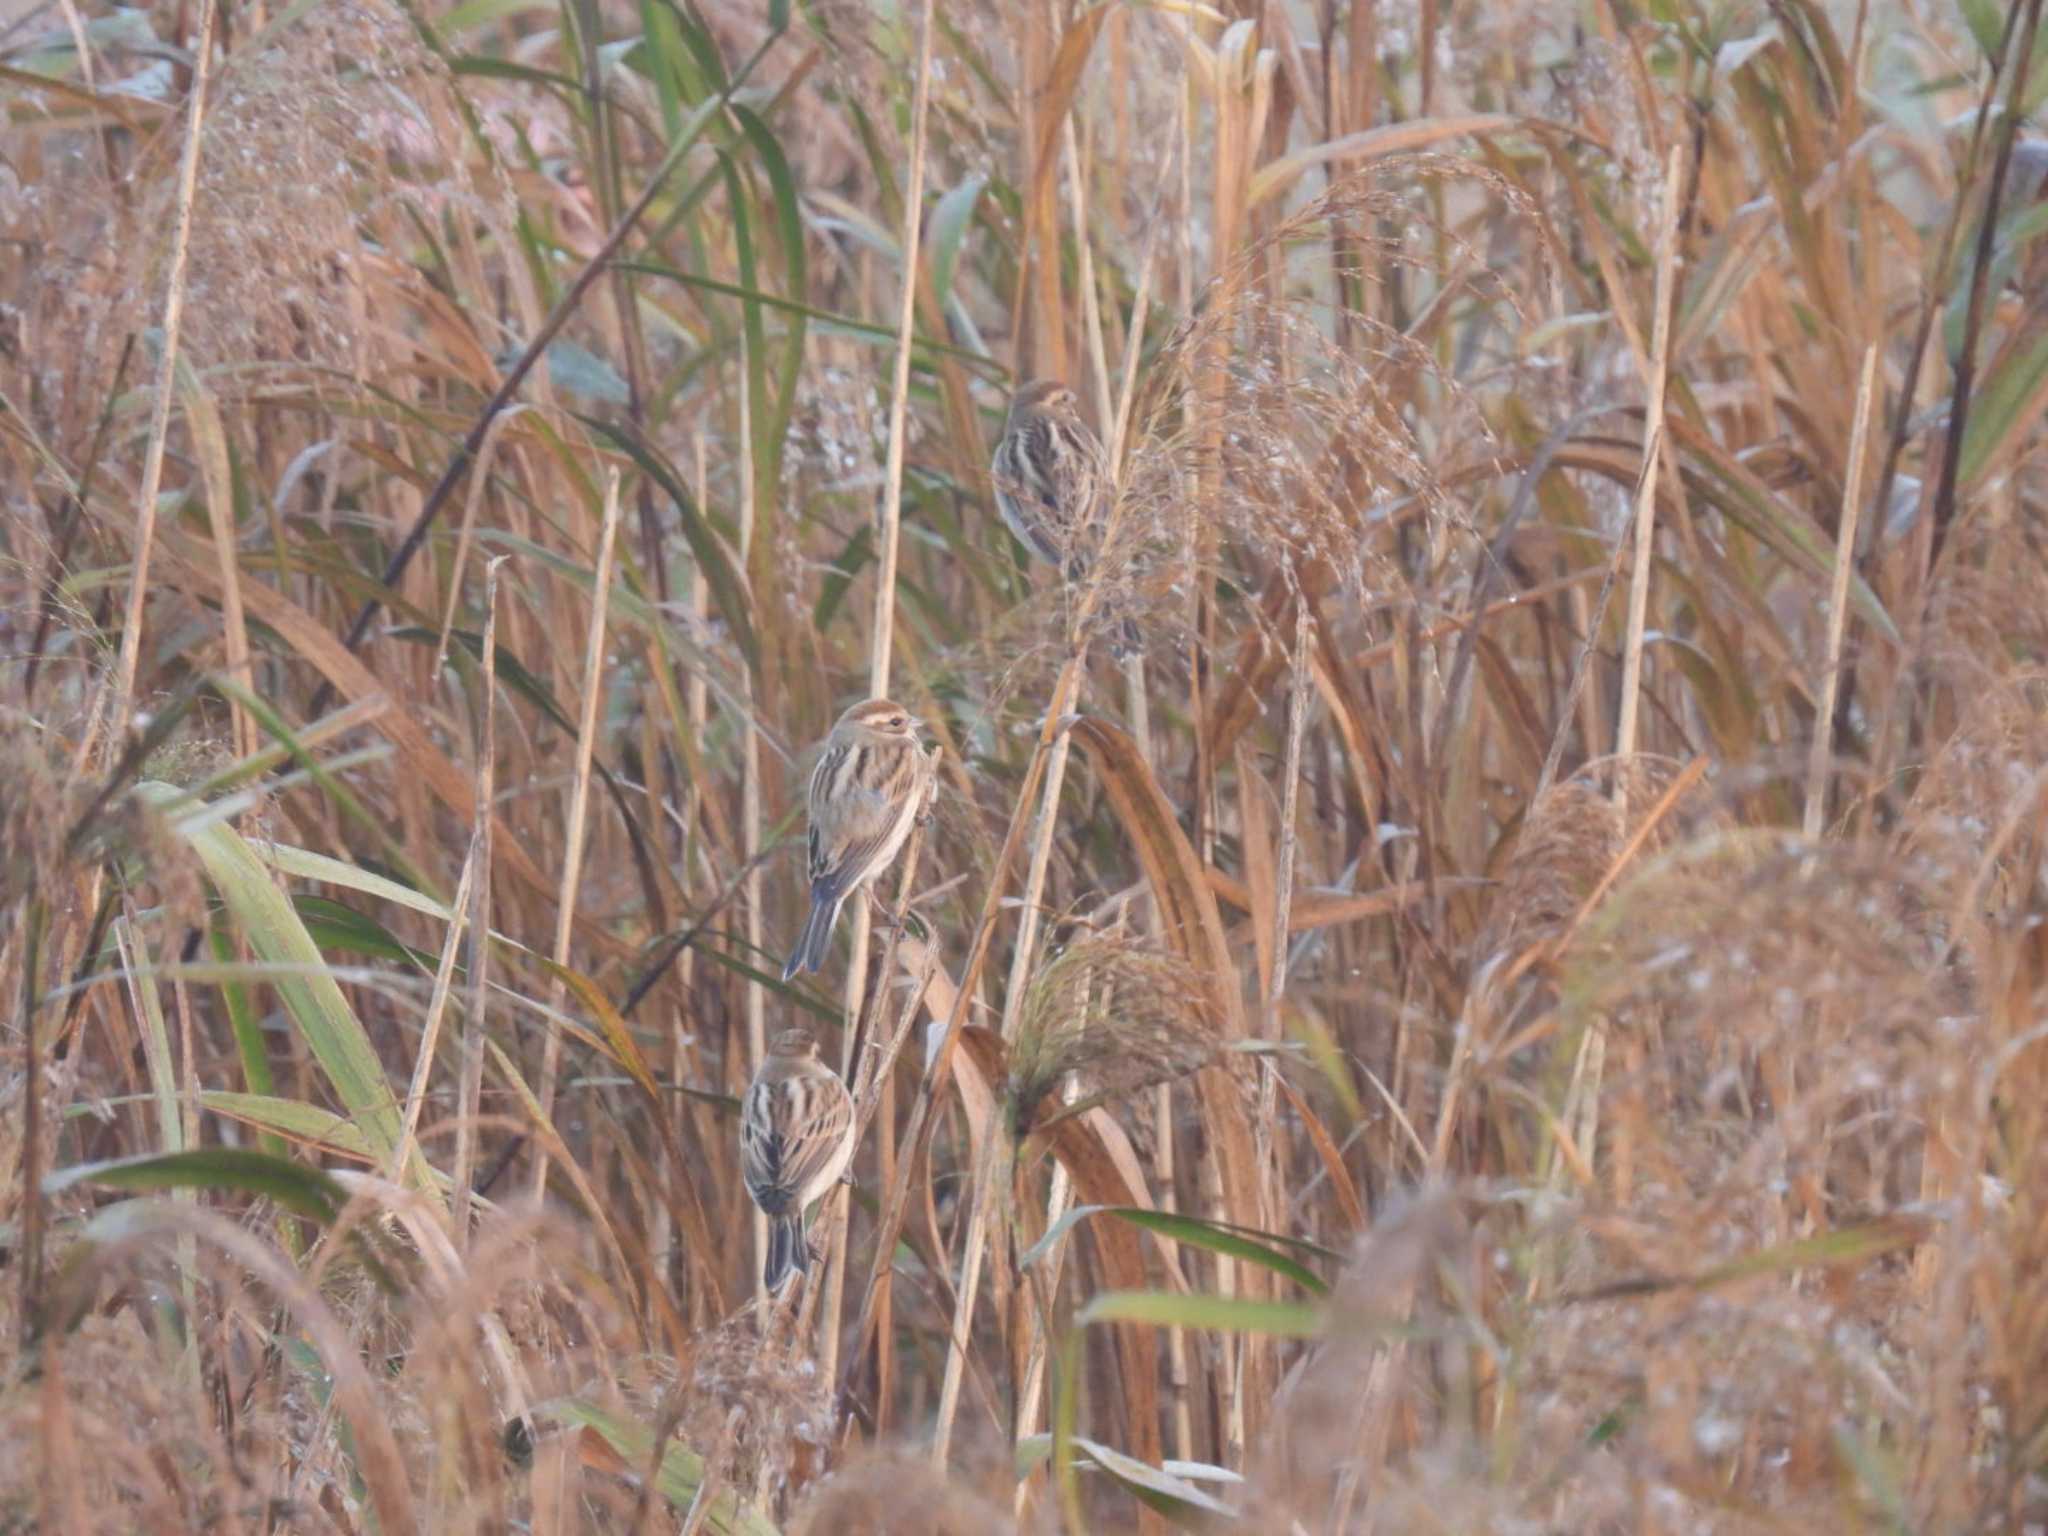 Photo of Common Reed Bunting at Izunuma by カズー